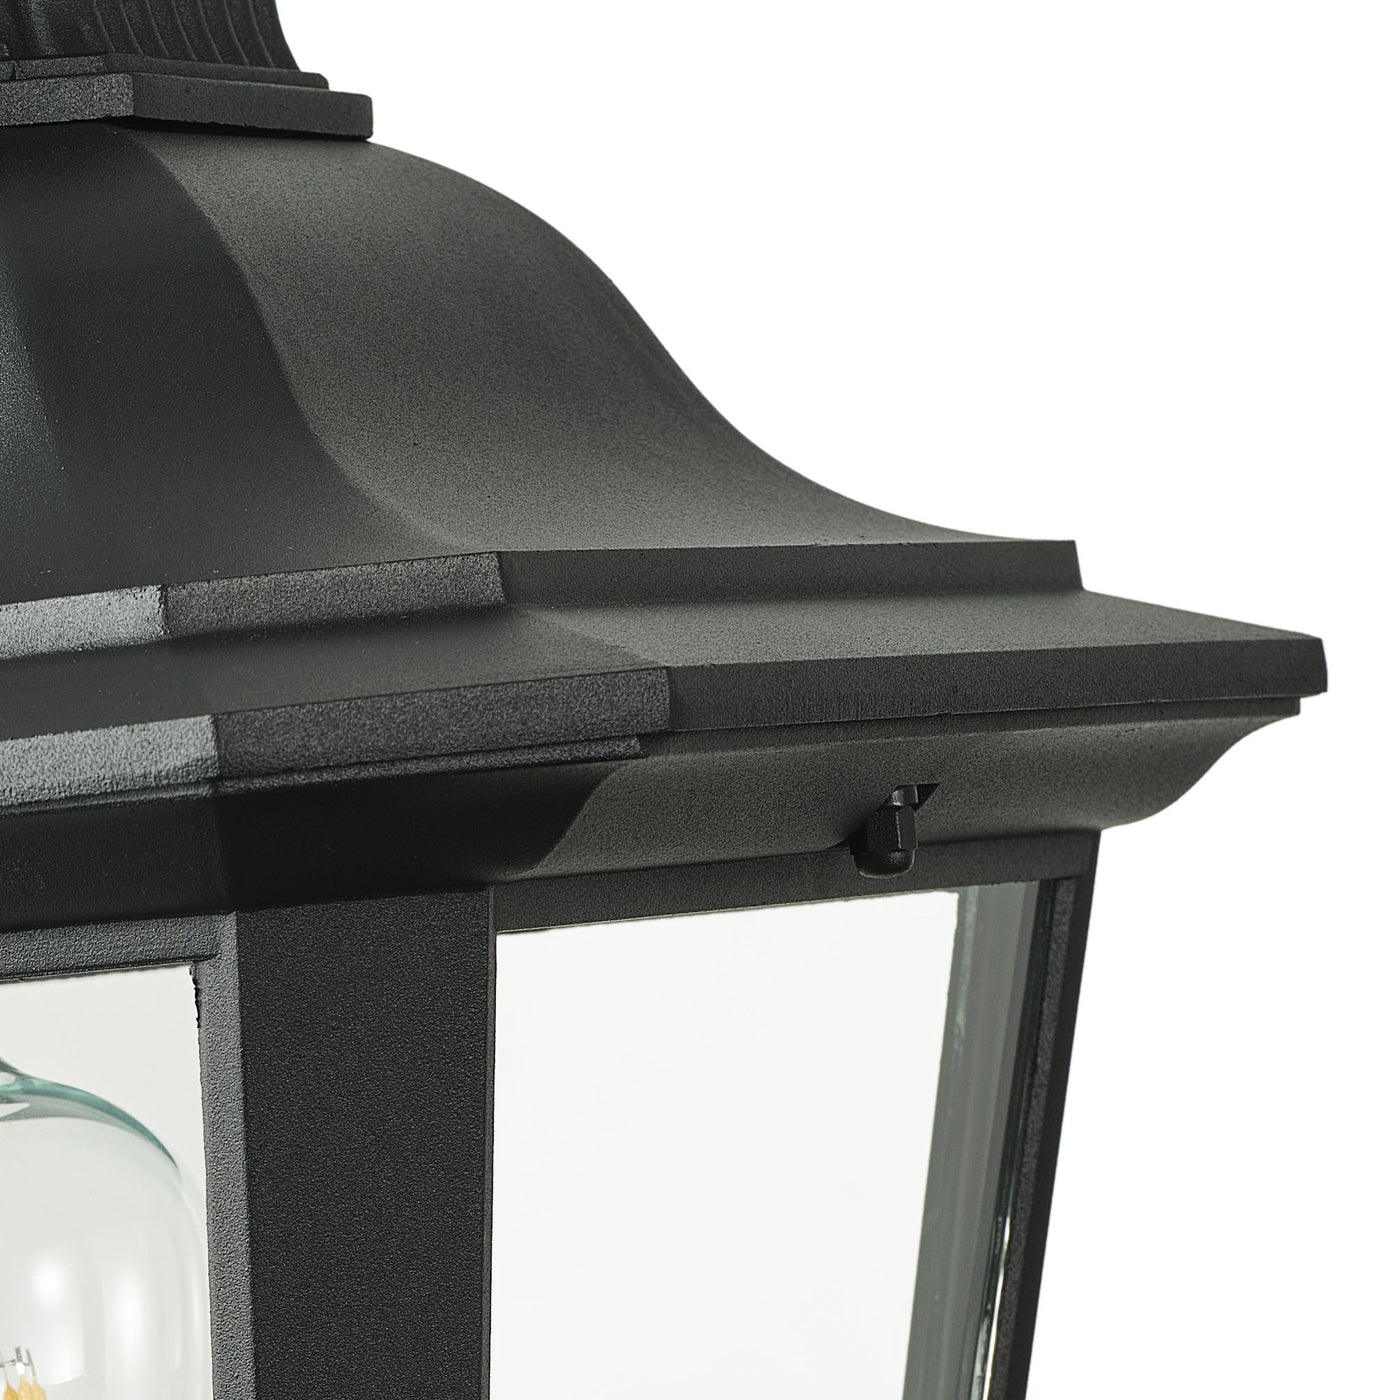 1-Light Pointed Roof Waterproof Outdoor Lighting